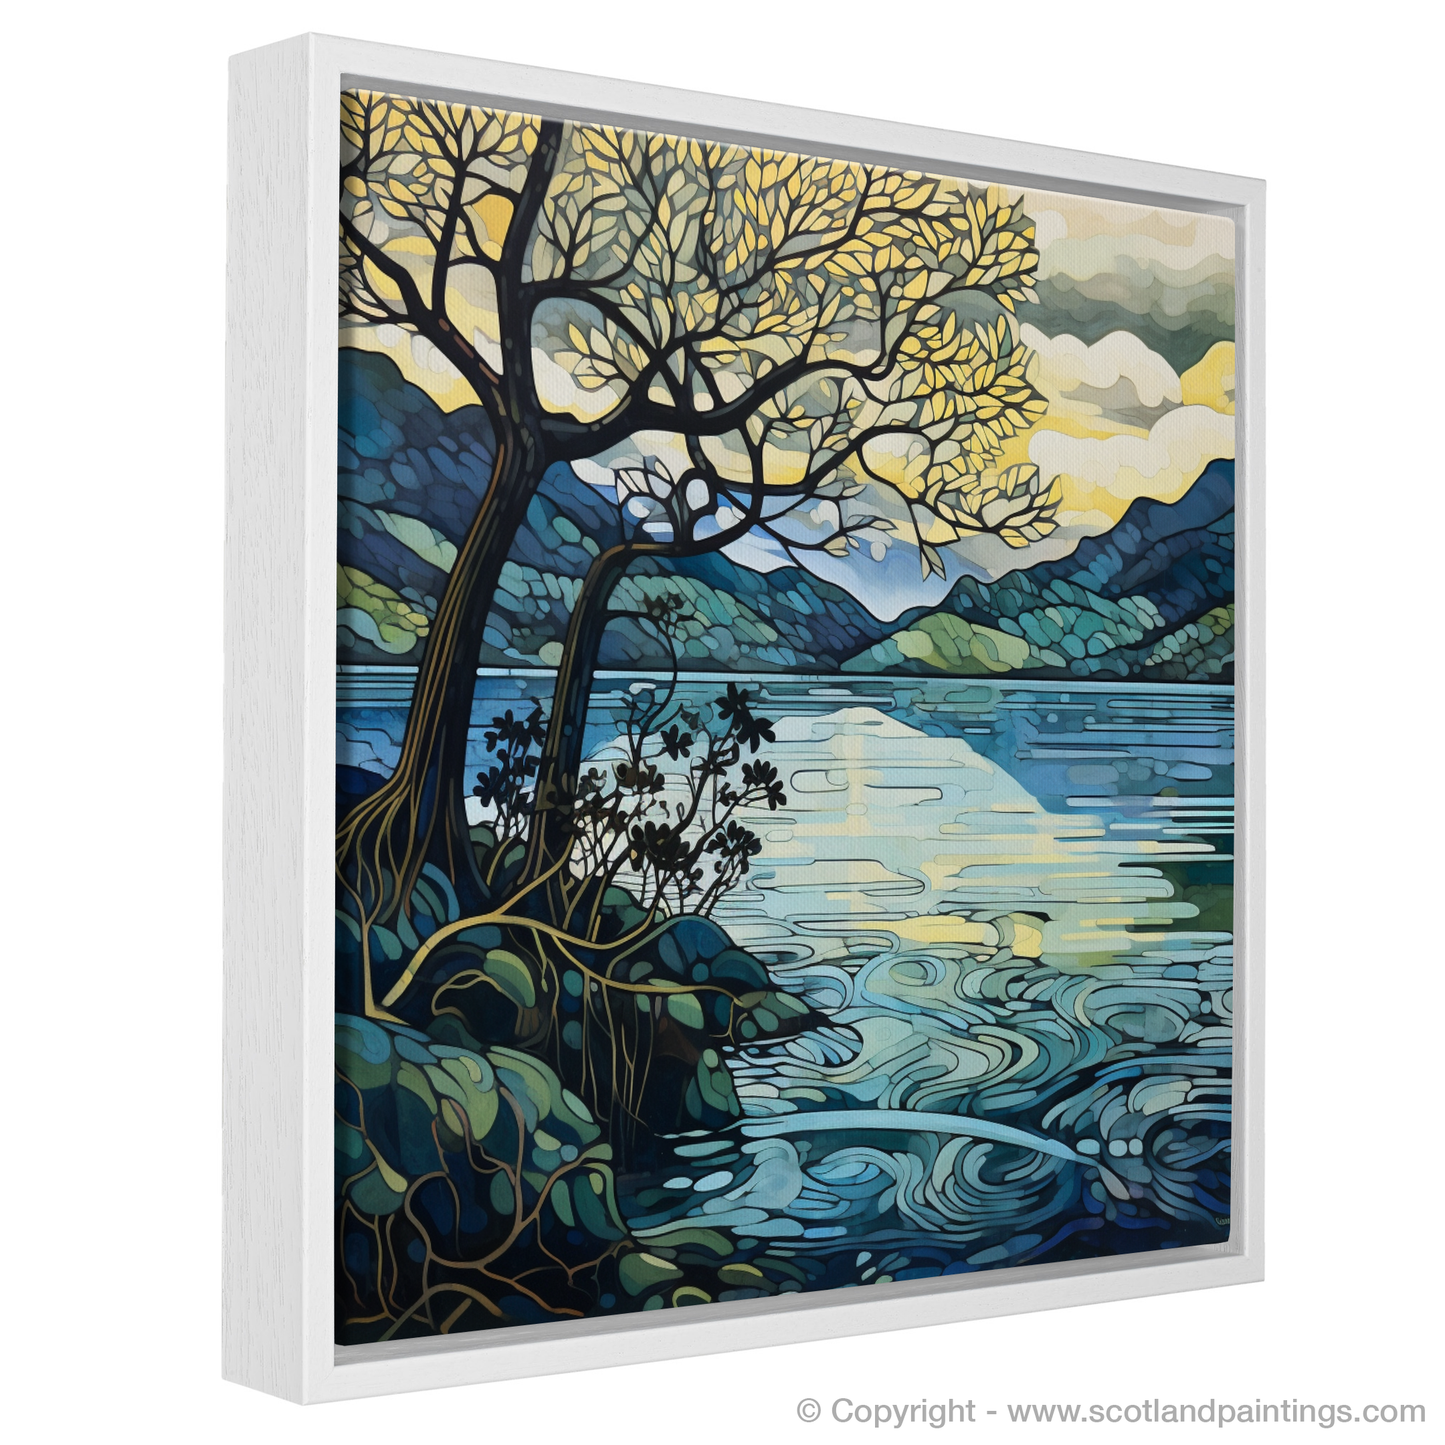 Painting and Art Print of Loch Lomond entitled "Art Nouveau Elegance of Loch Lomond".